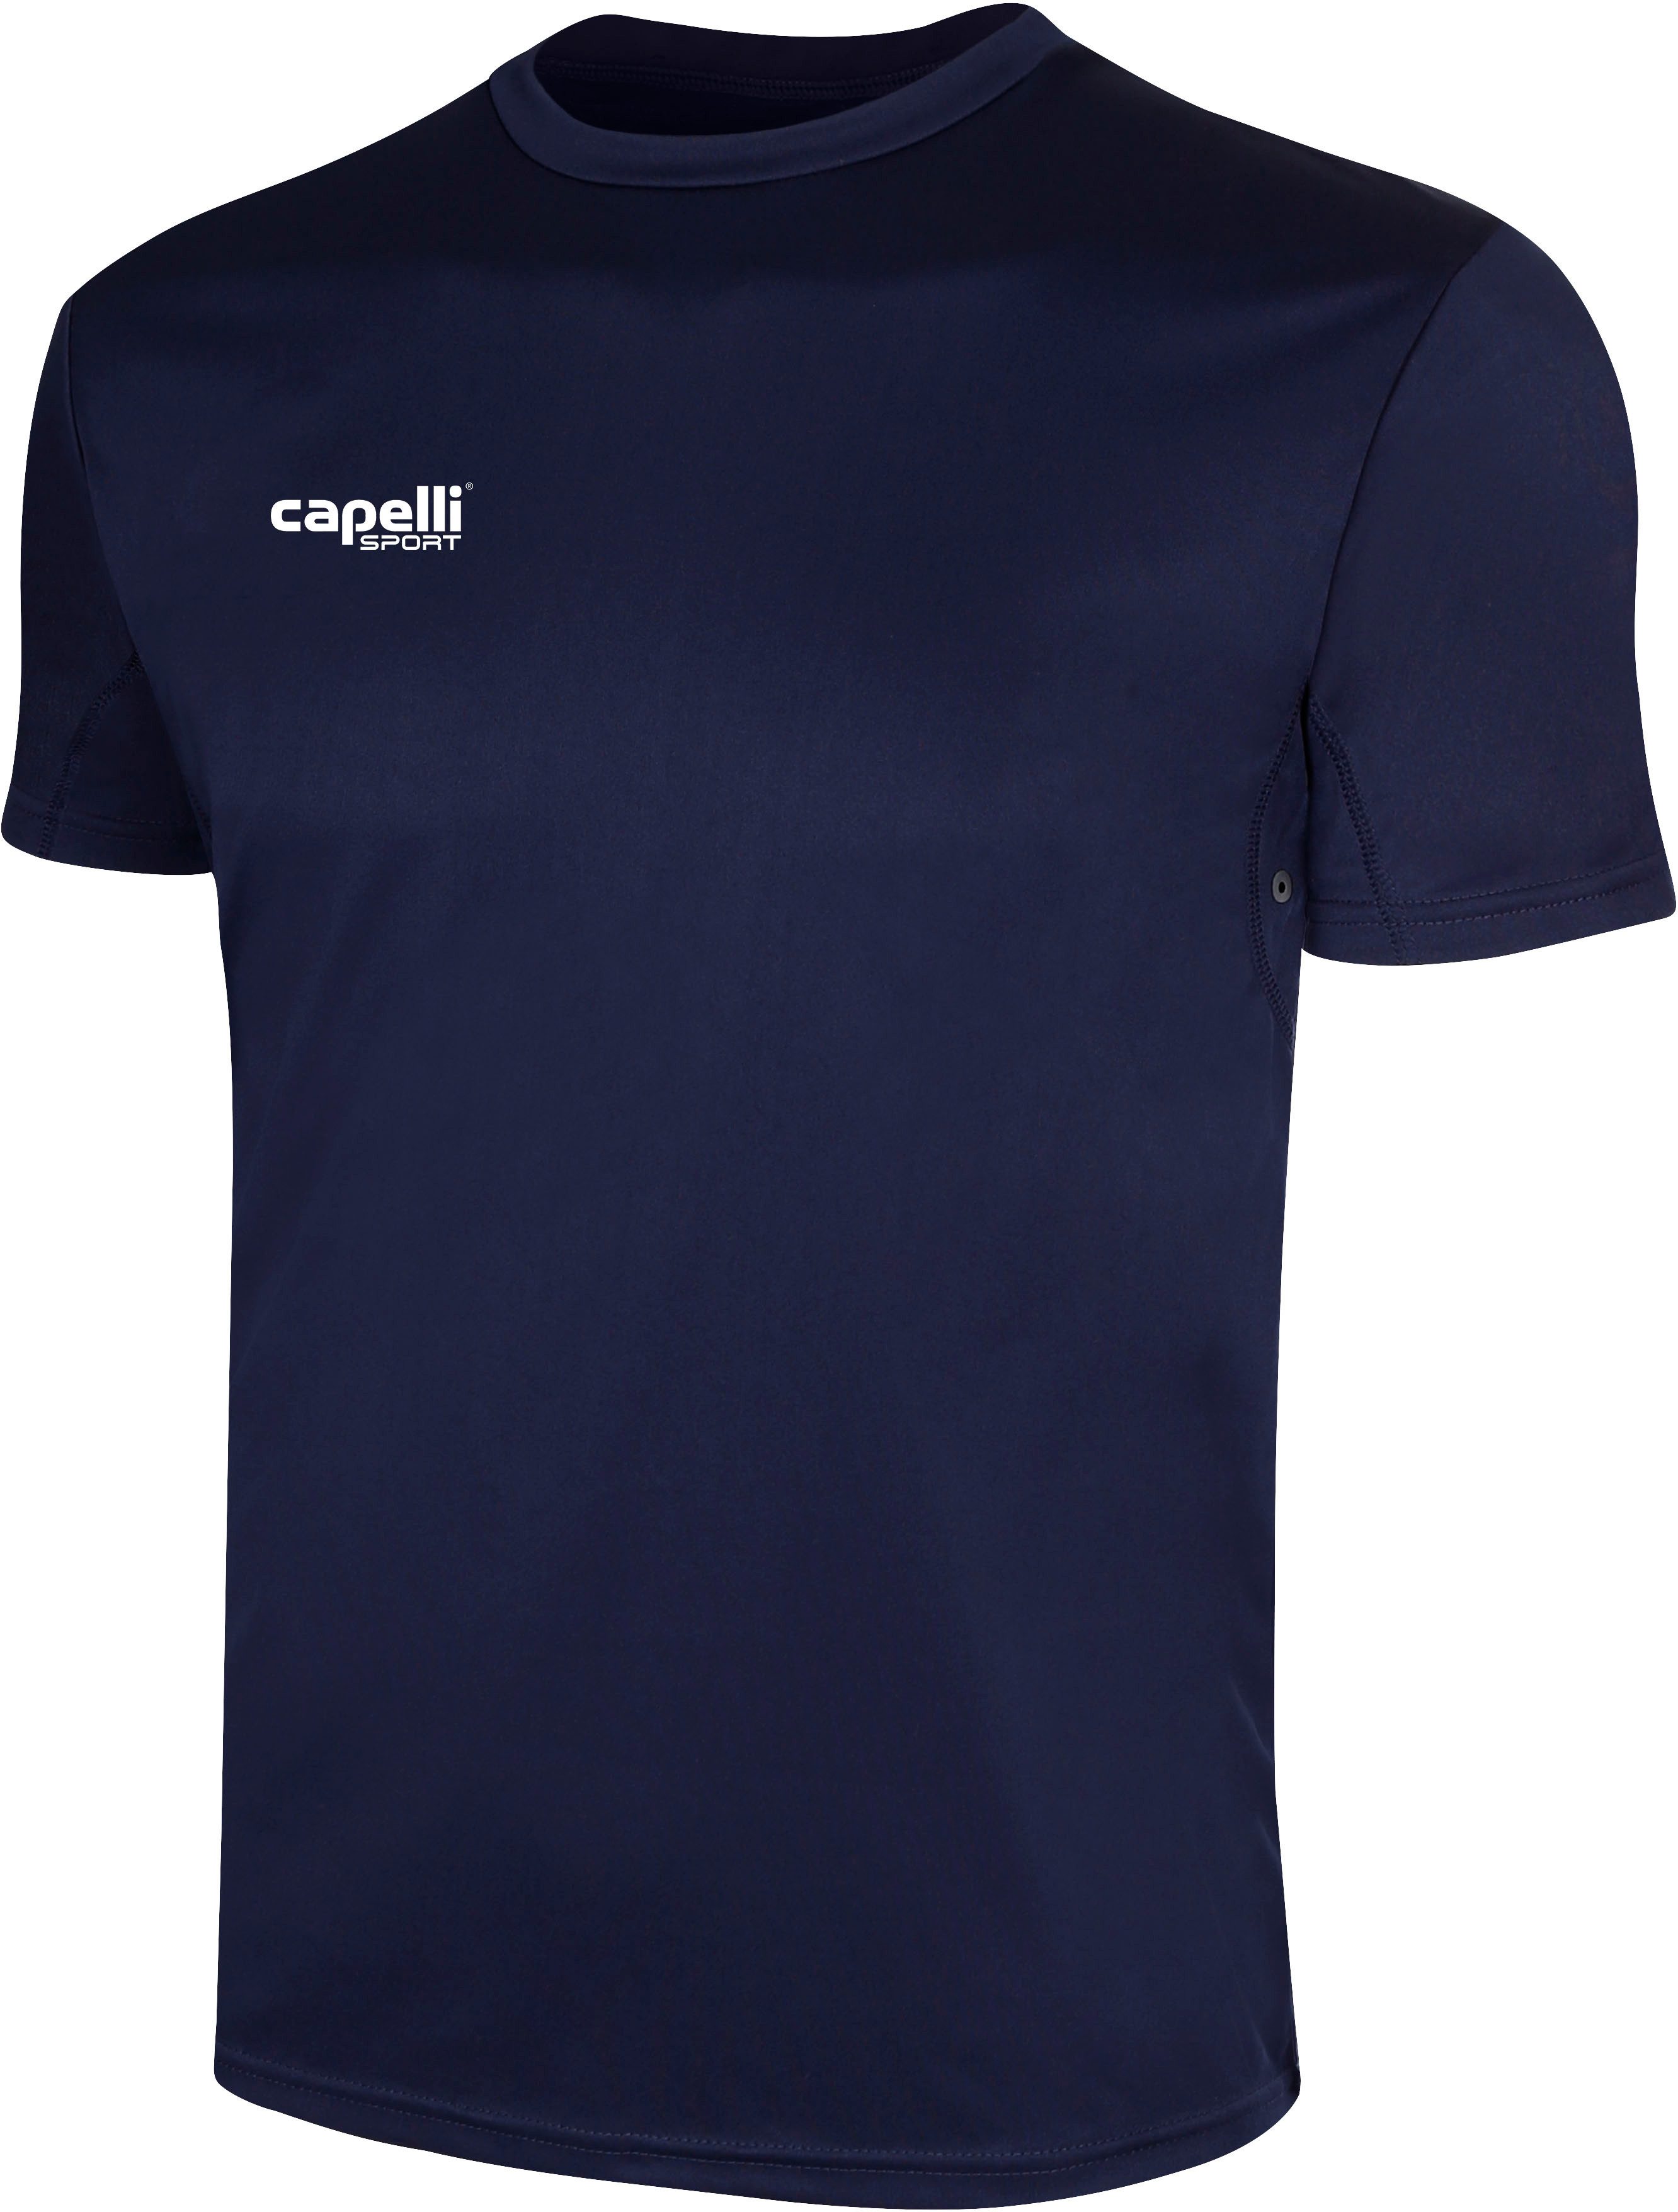 Capelli Sport Trainingsshirt mit Belüftungslöchern unter den Ärmeln